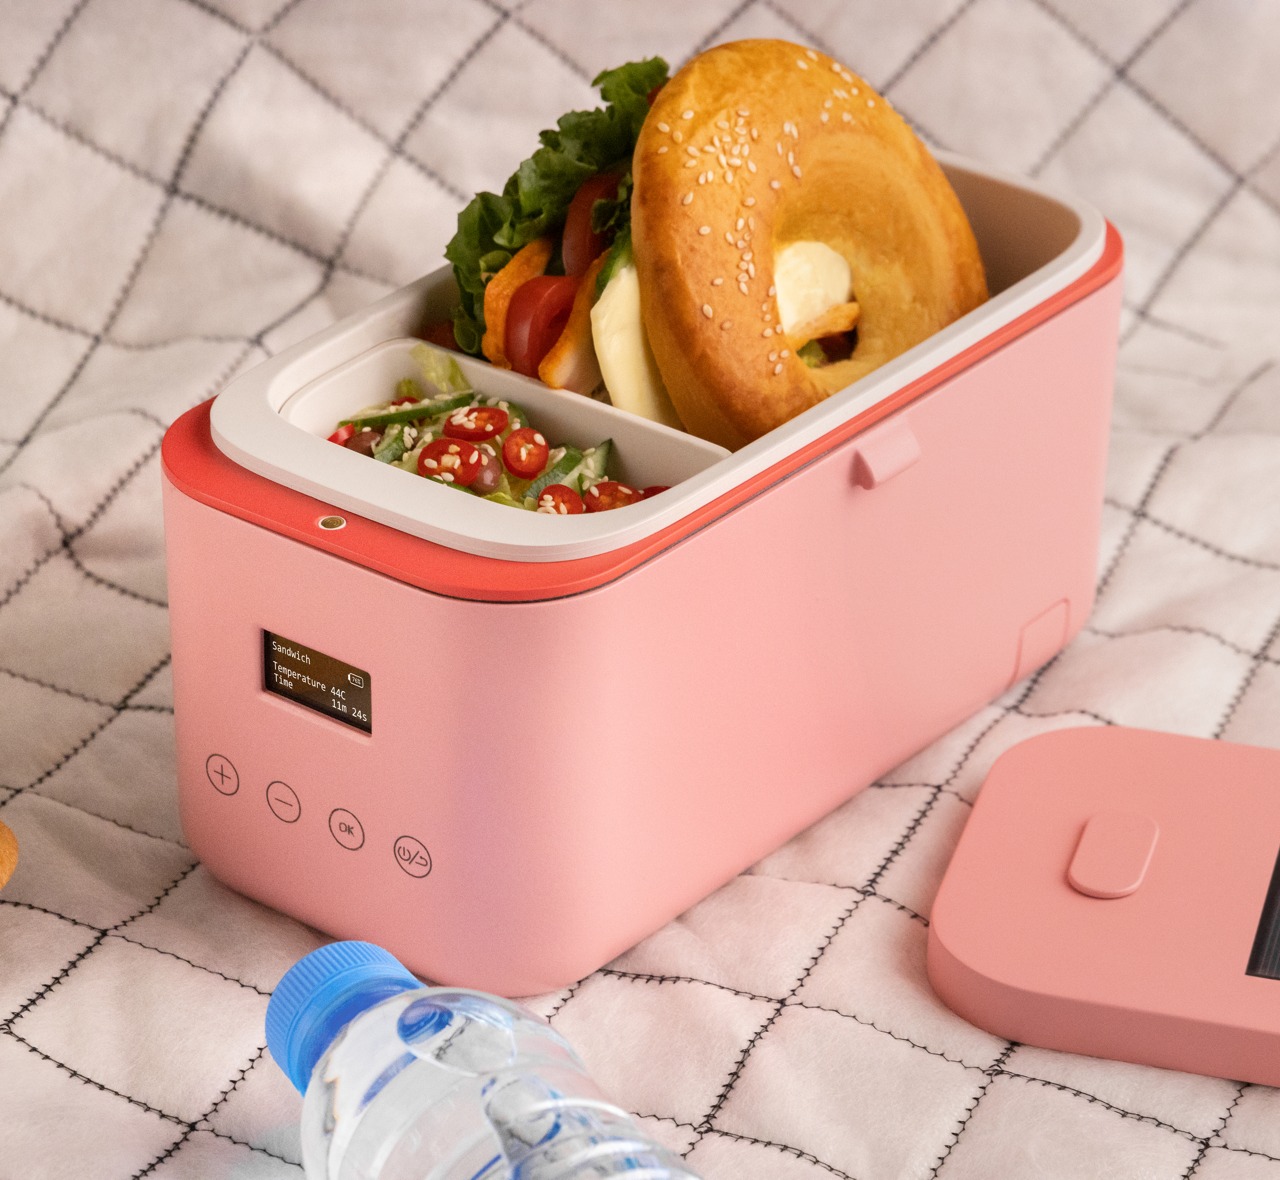 How to Keep Food Warm - Lunchbox Tips